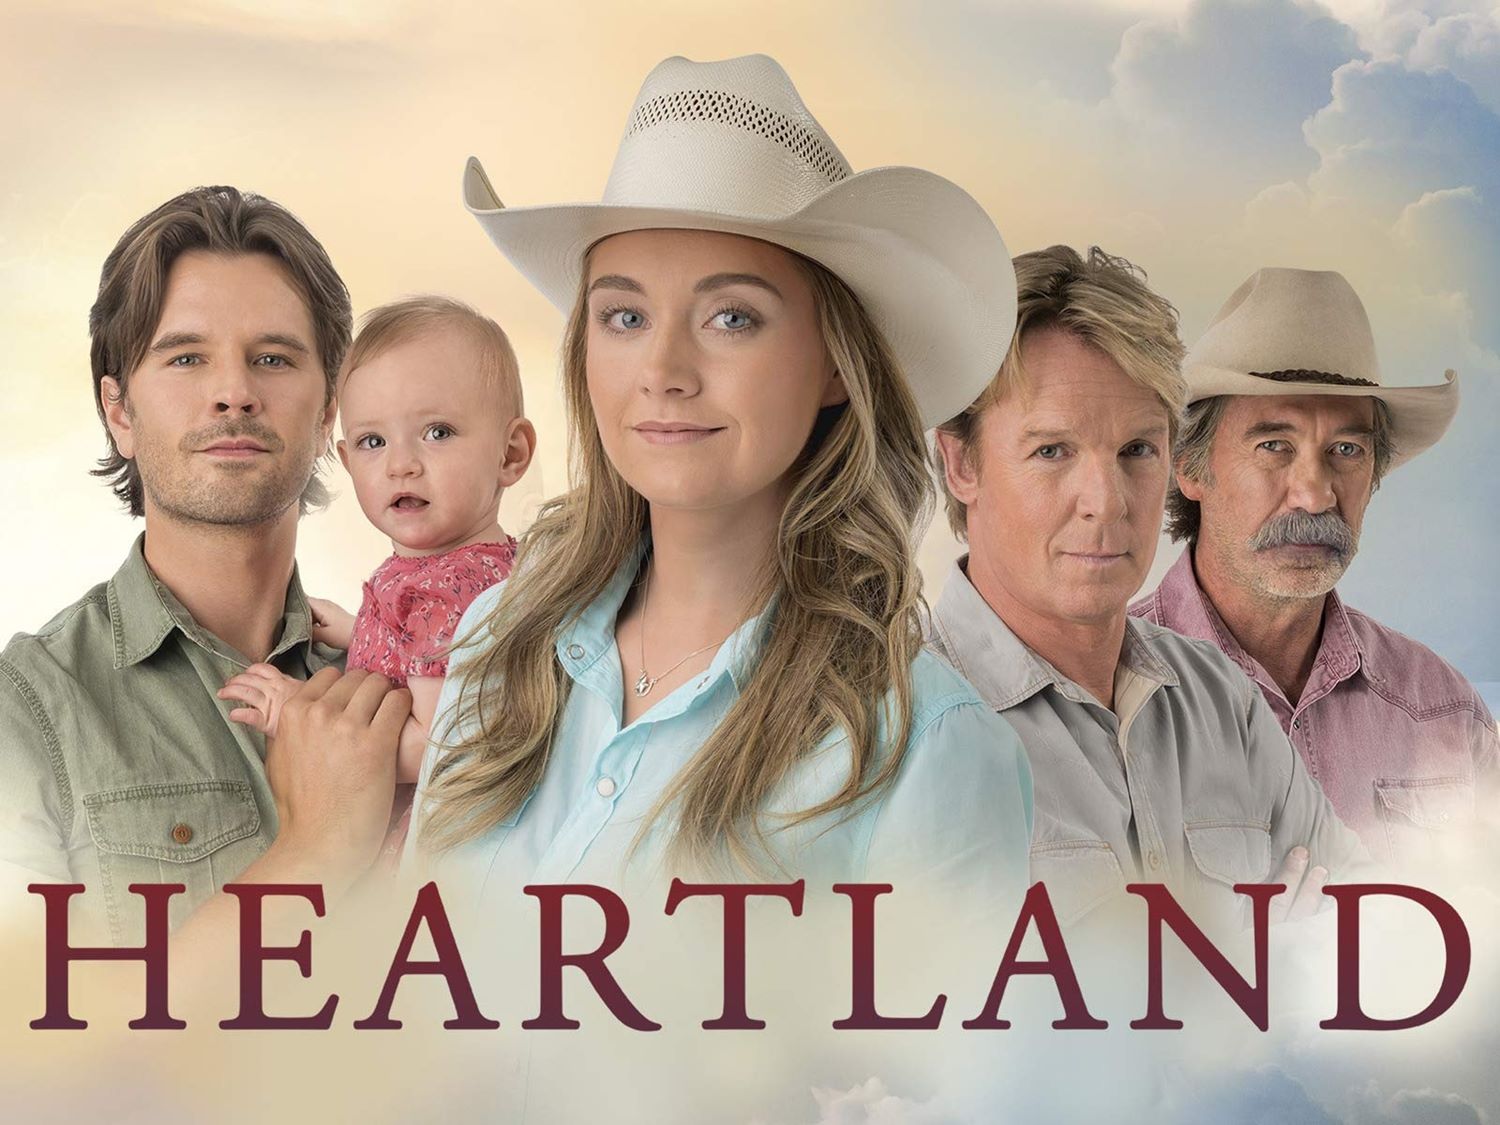 How To Watch Heartland Season 15 For Free